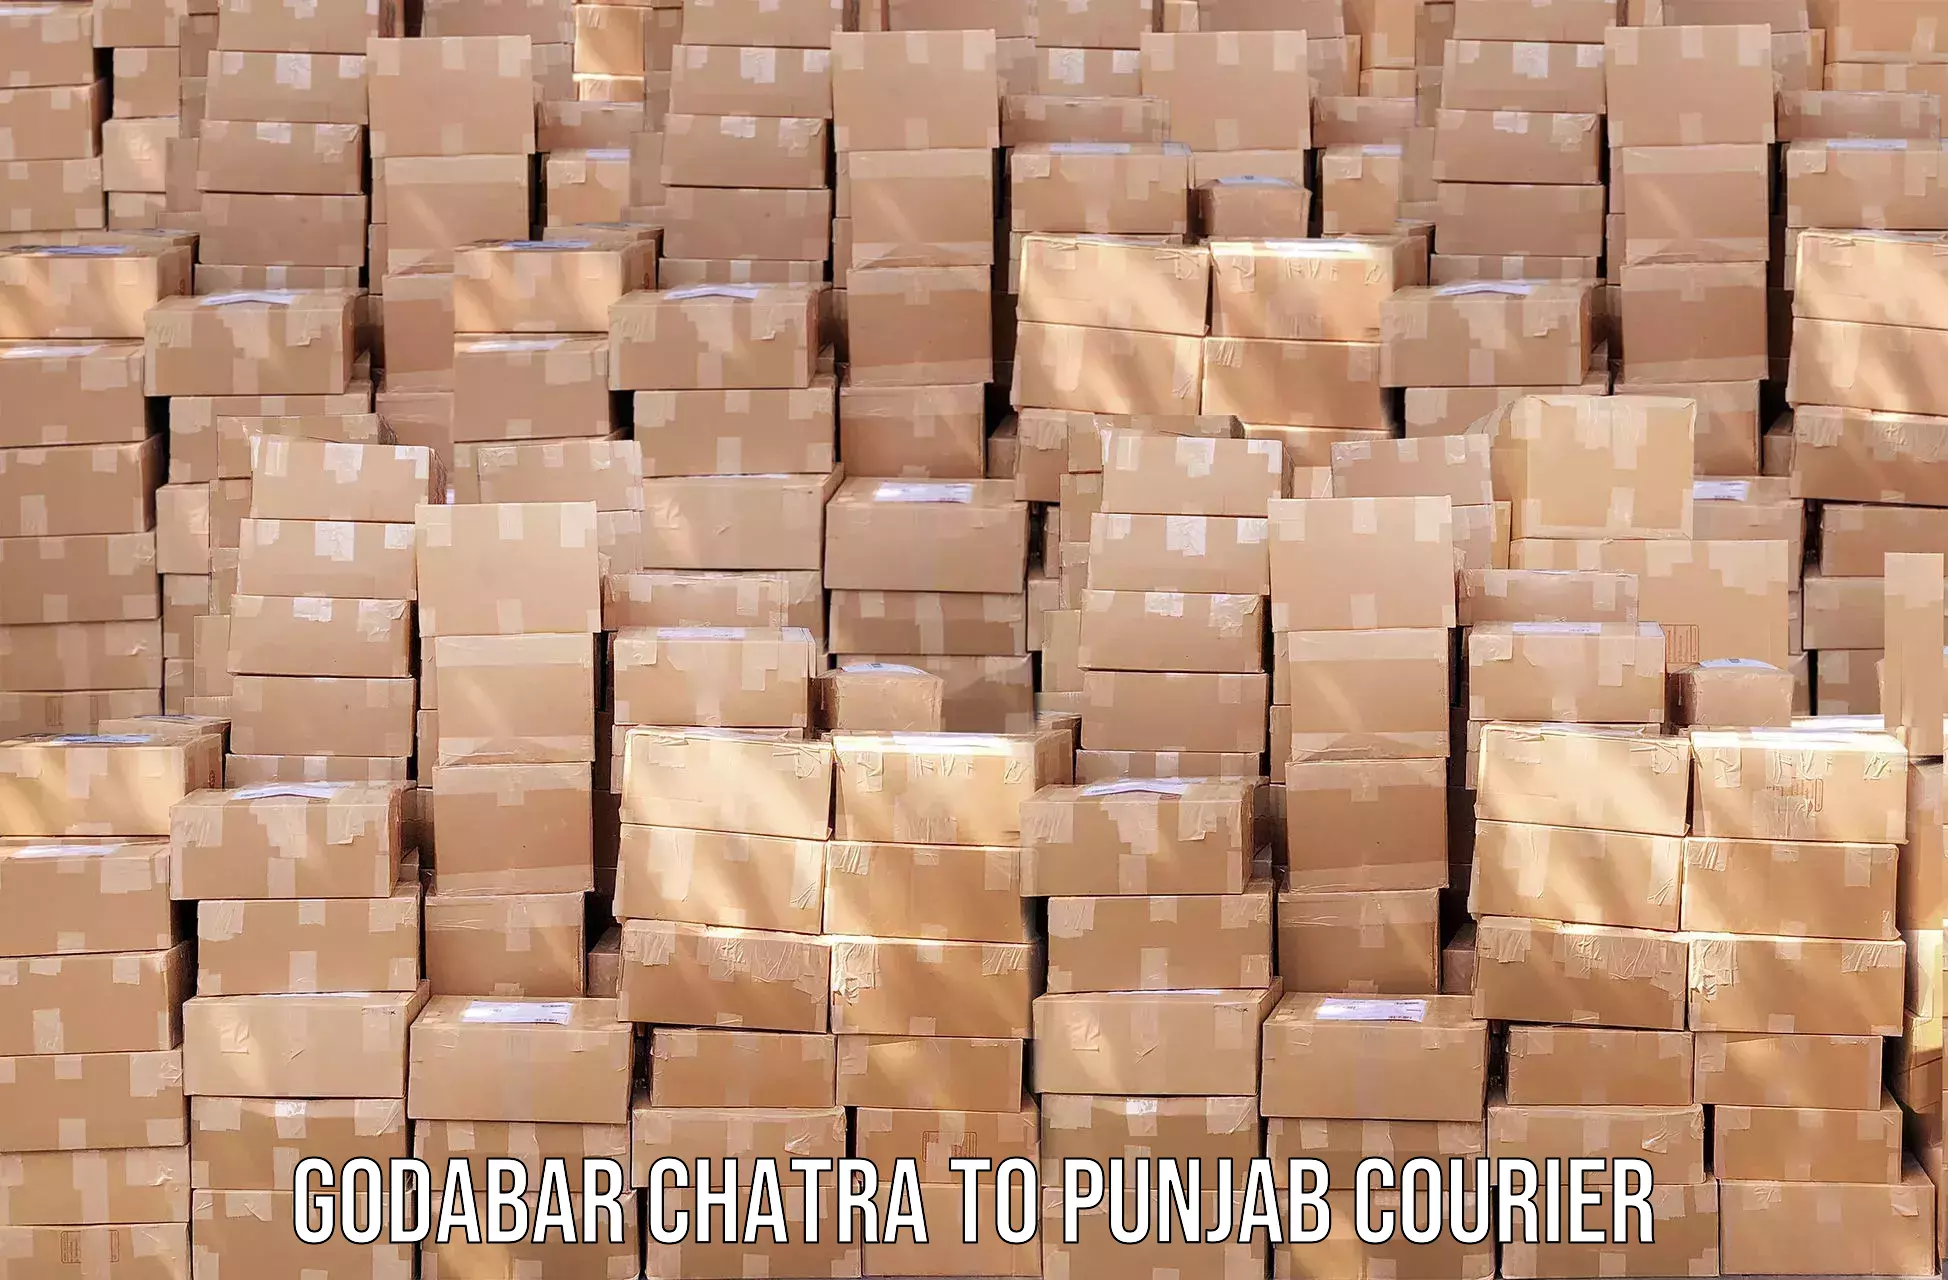 24/7 courier service Godabar Chatra to Ajnala